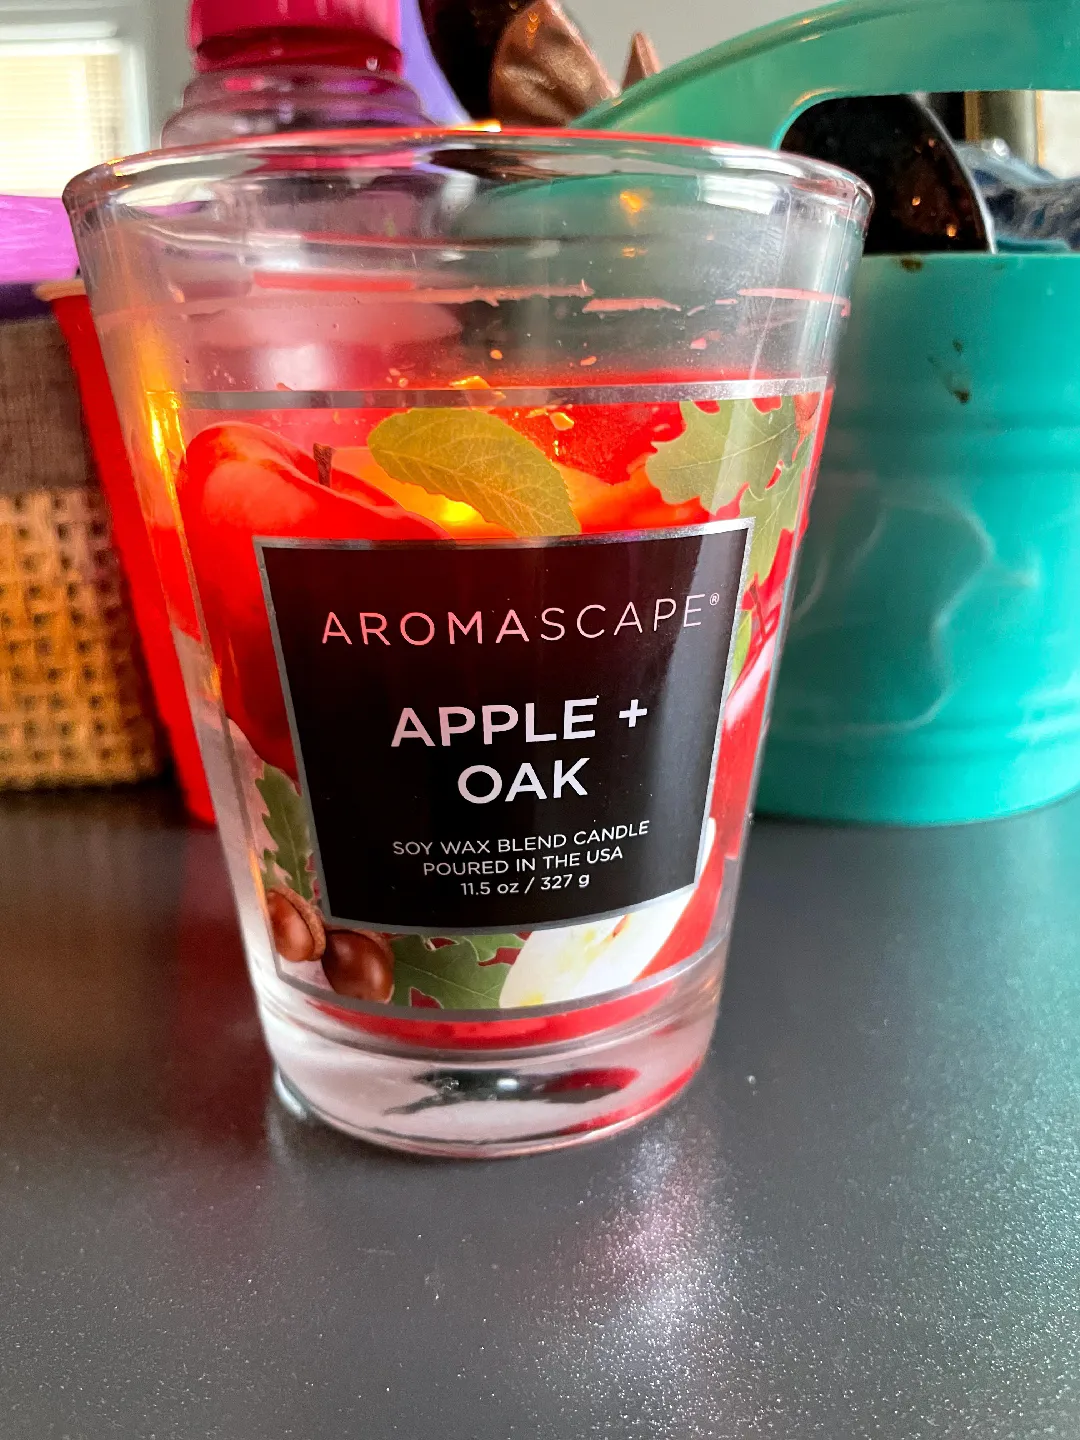 Aromascape Candle, Soy Wax Blend, Apple + Oak